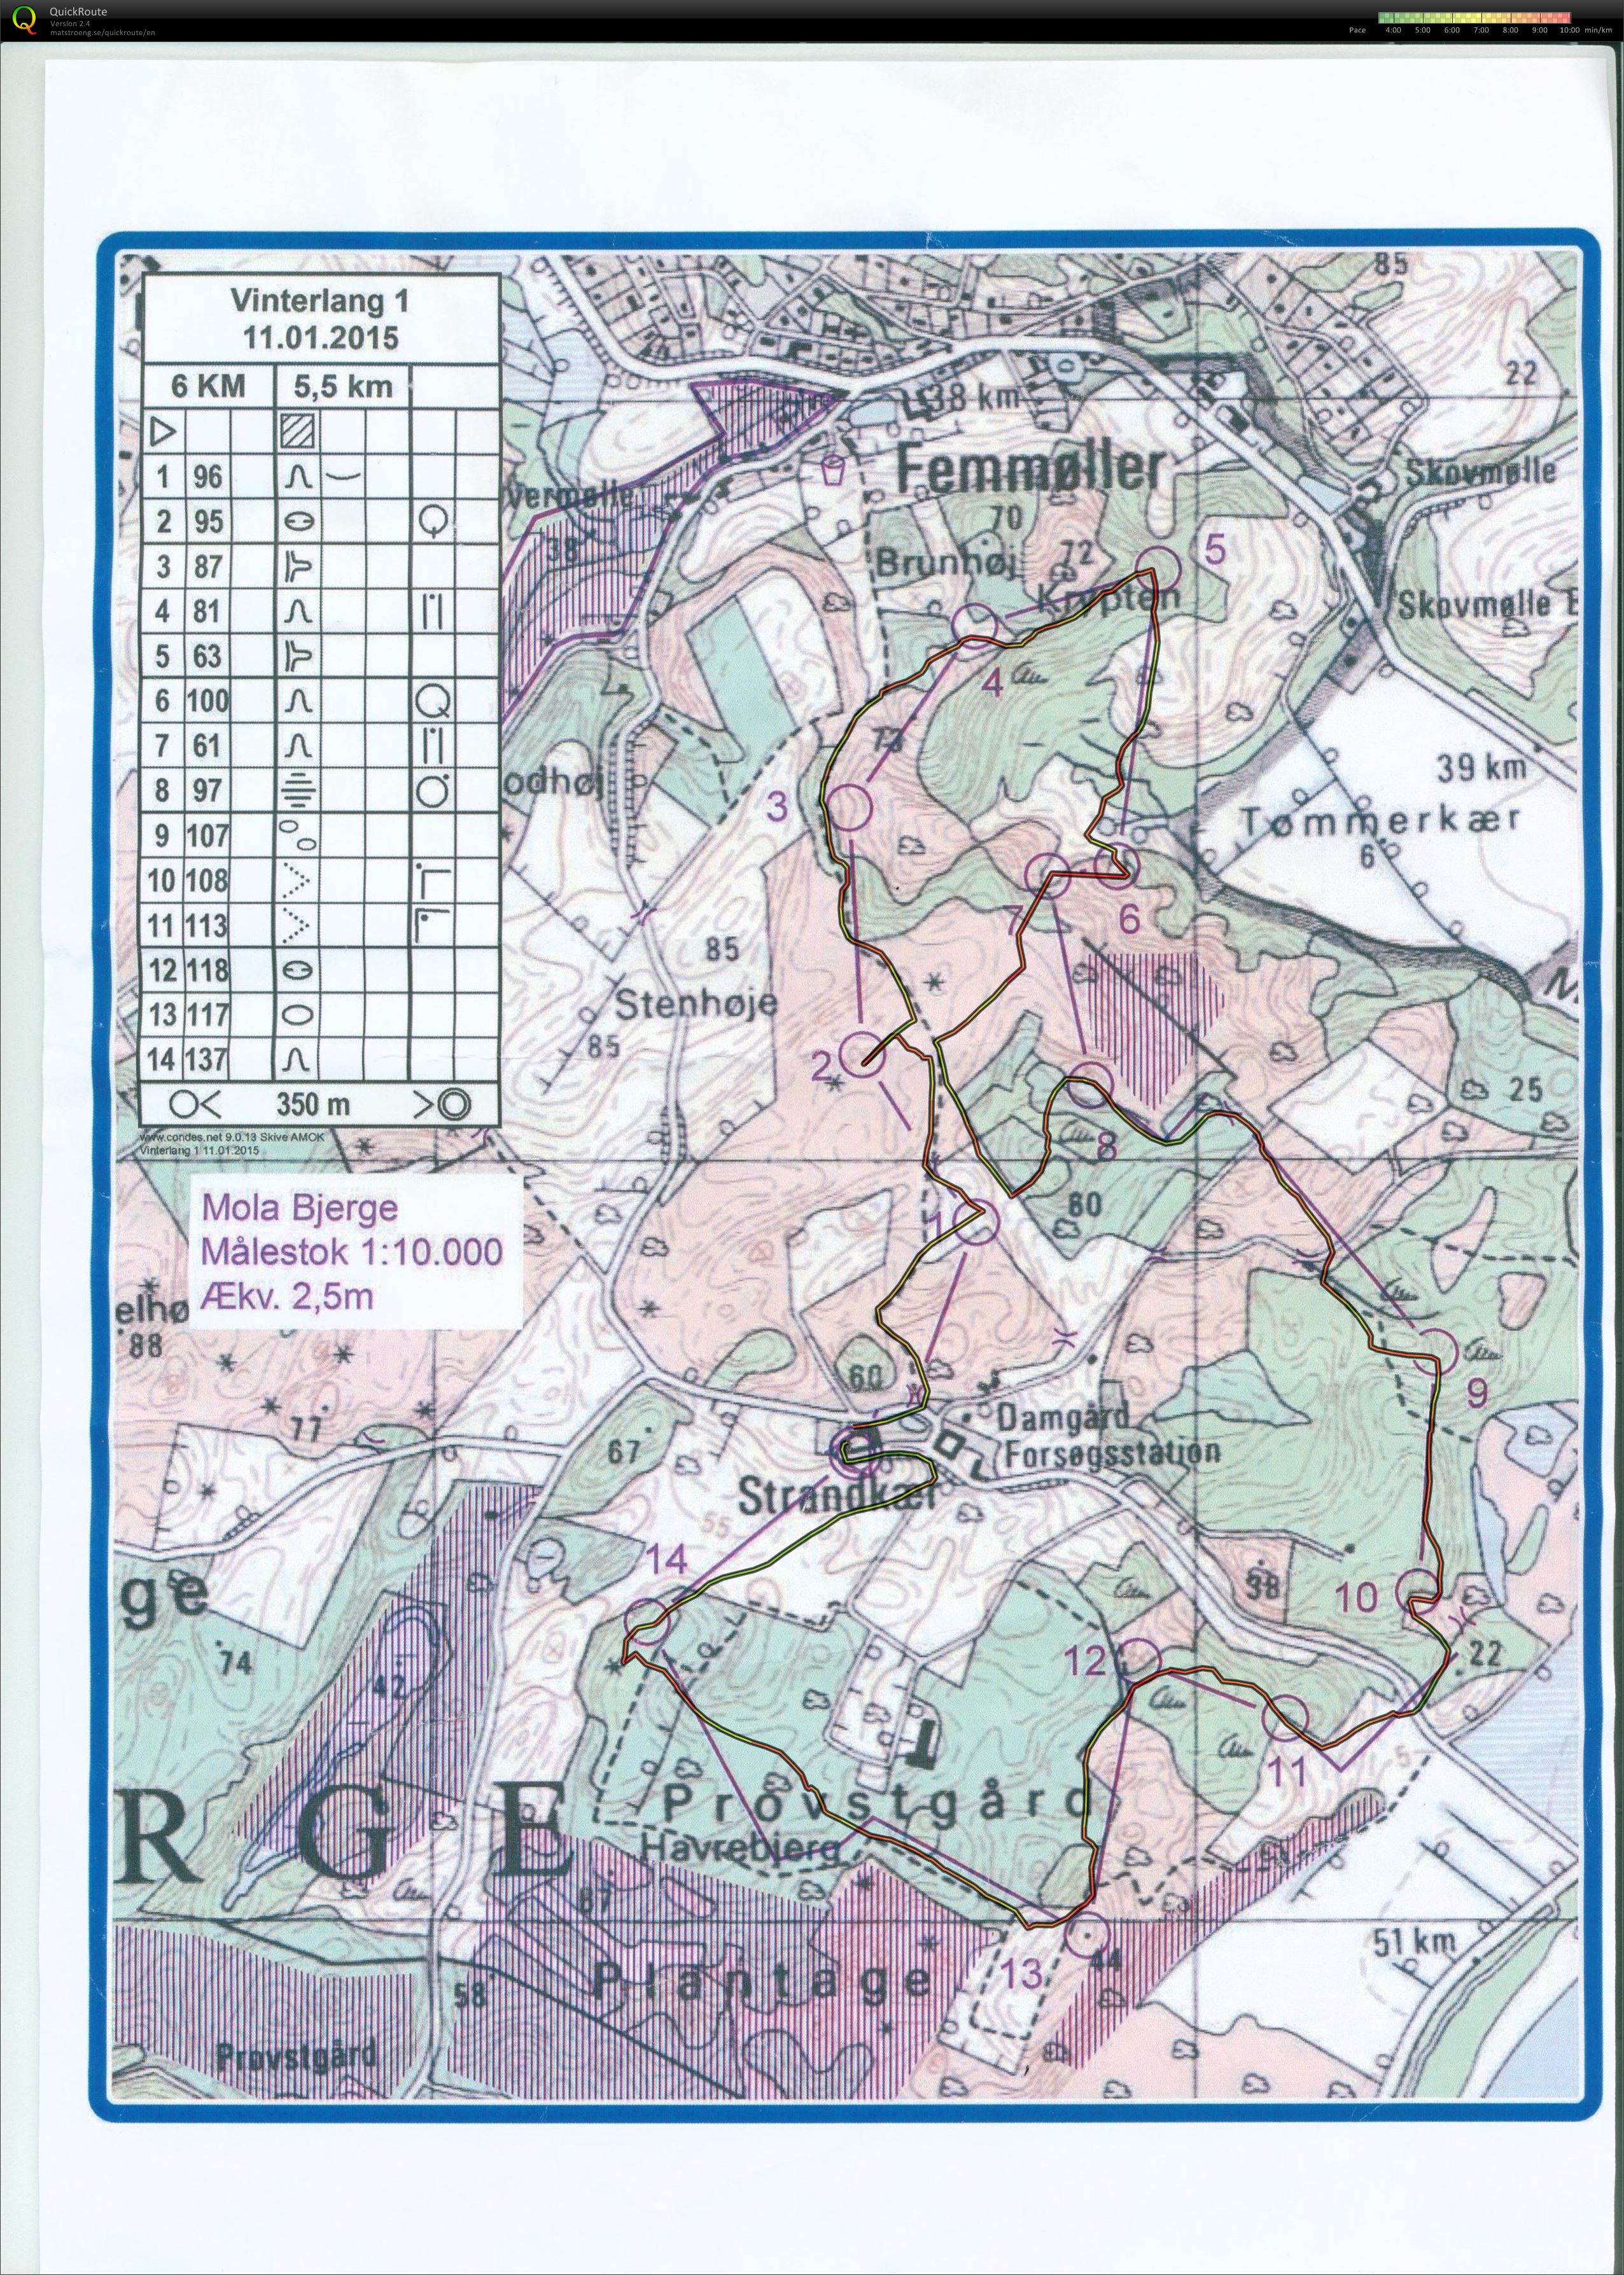 Mols Bjerge, Langdistance 1, 6 km, Pia Gade, 110115 (11-01-2015)